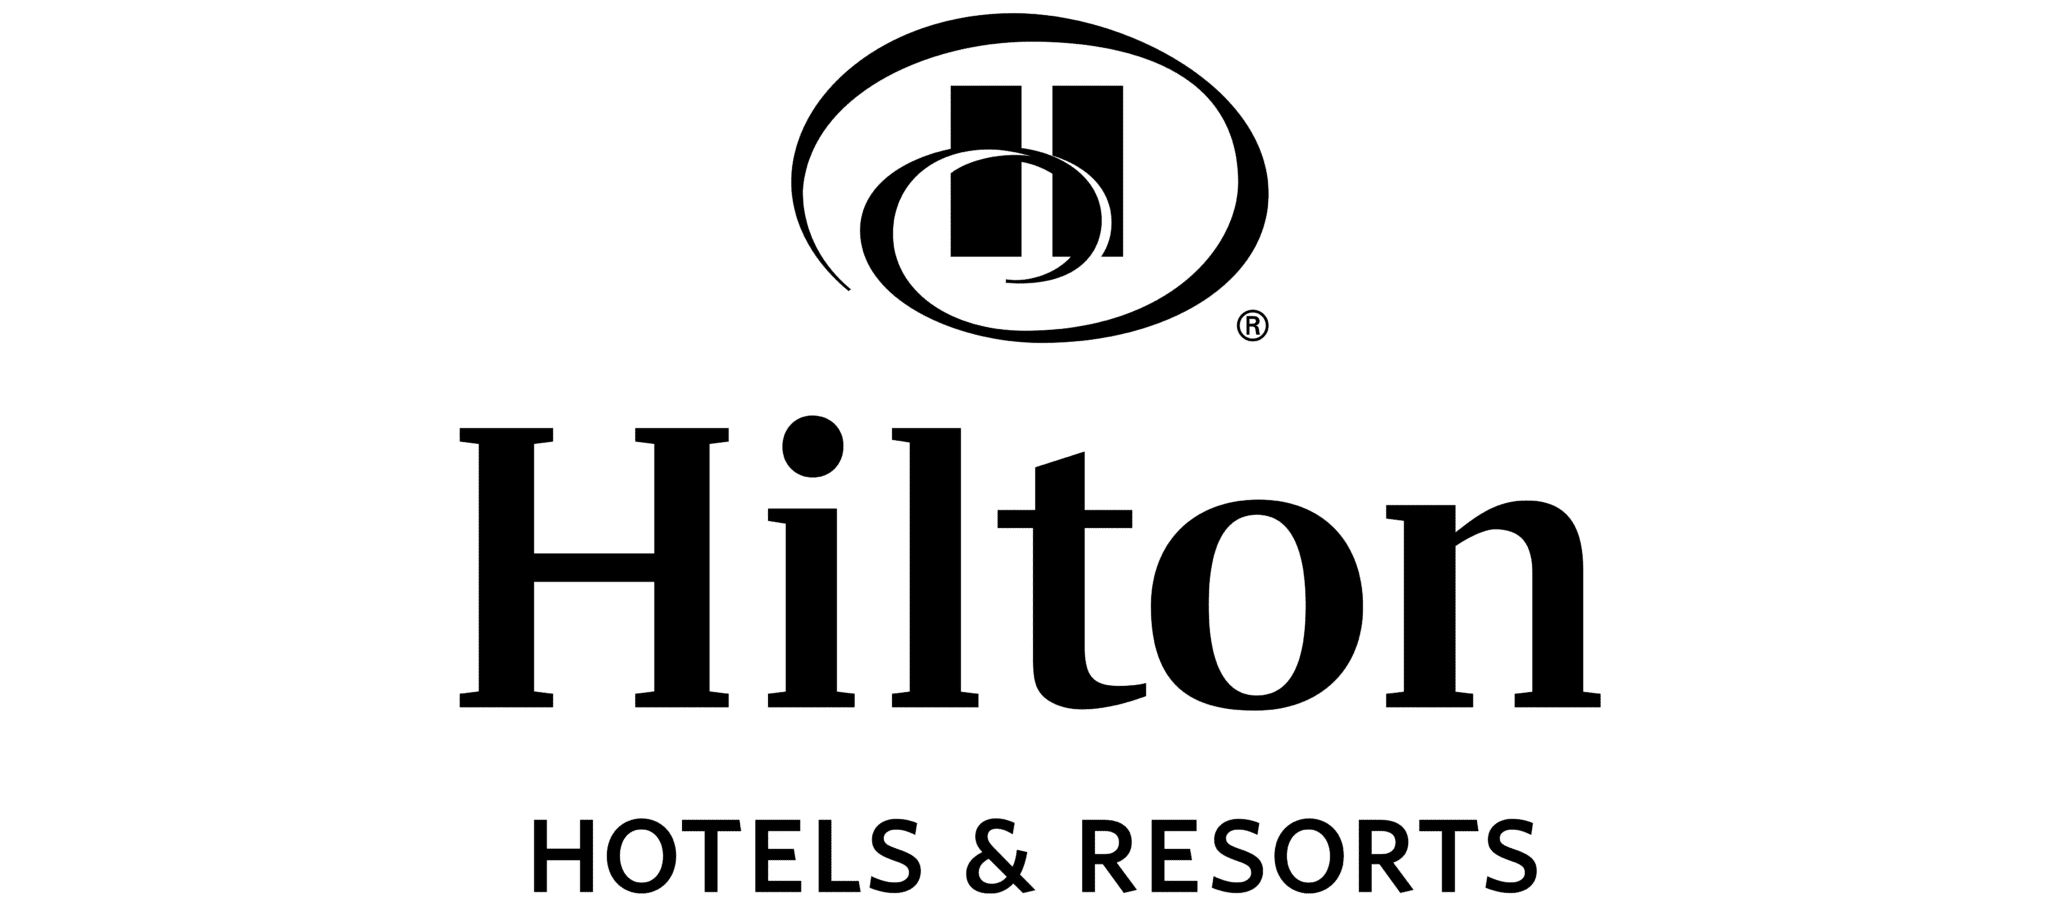 Hilton-logokopie